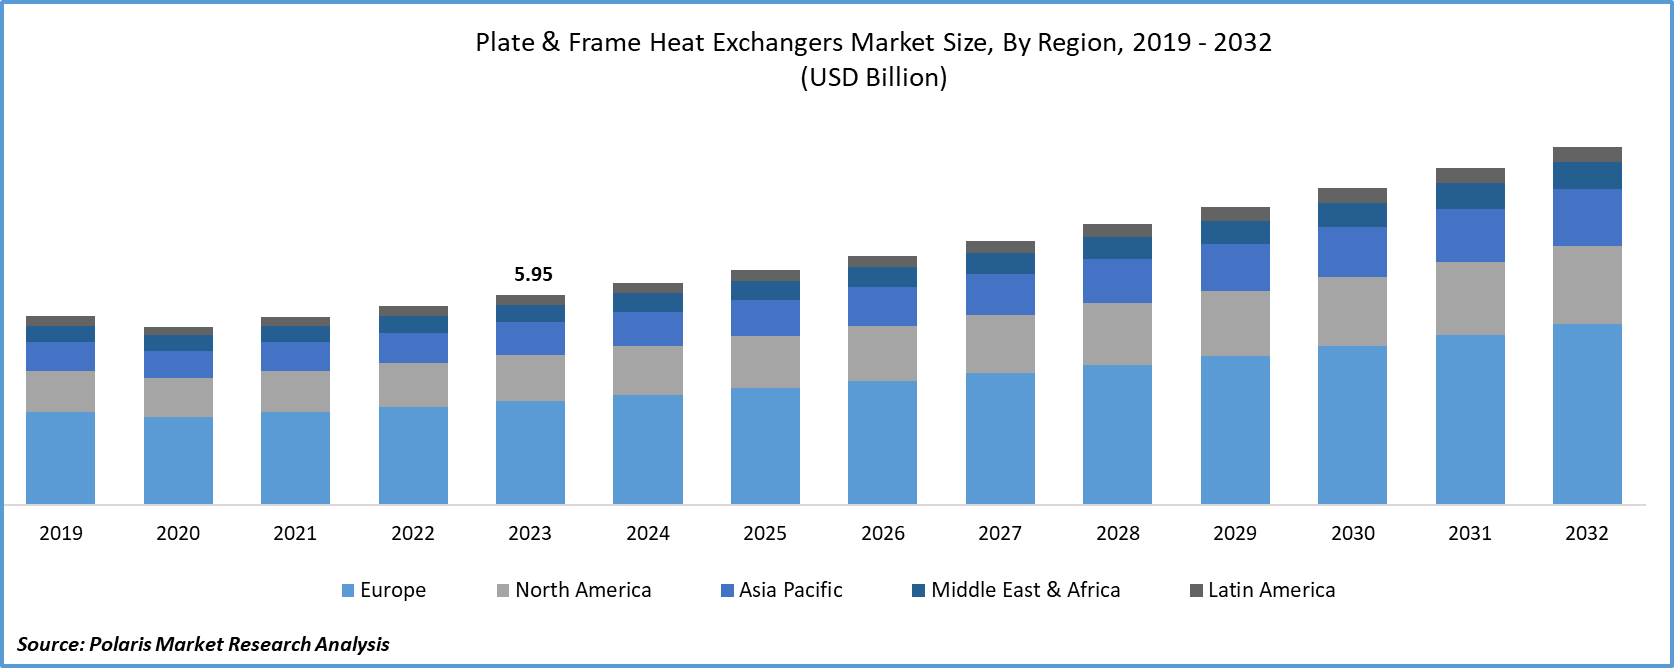 Plate & Frame Heat Exchangers Market Size